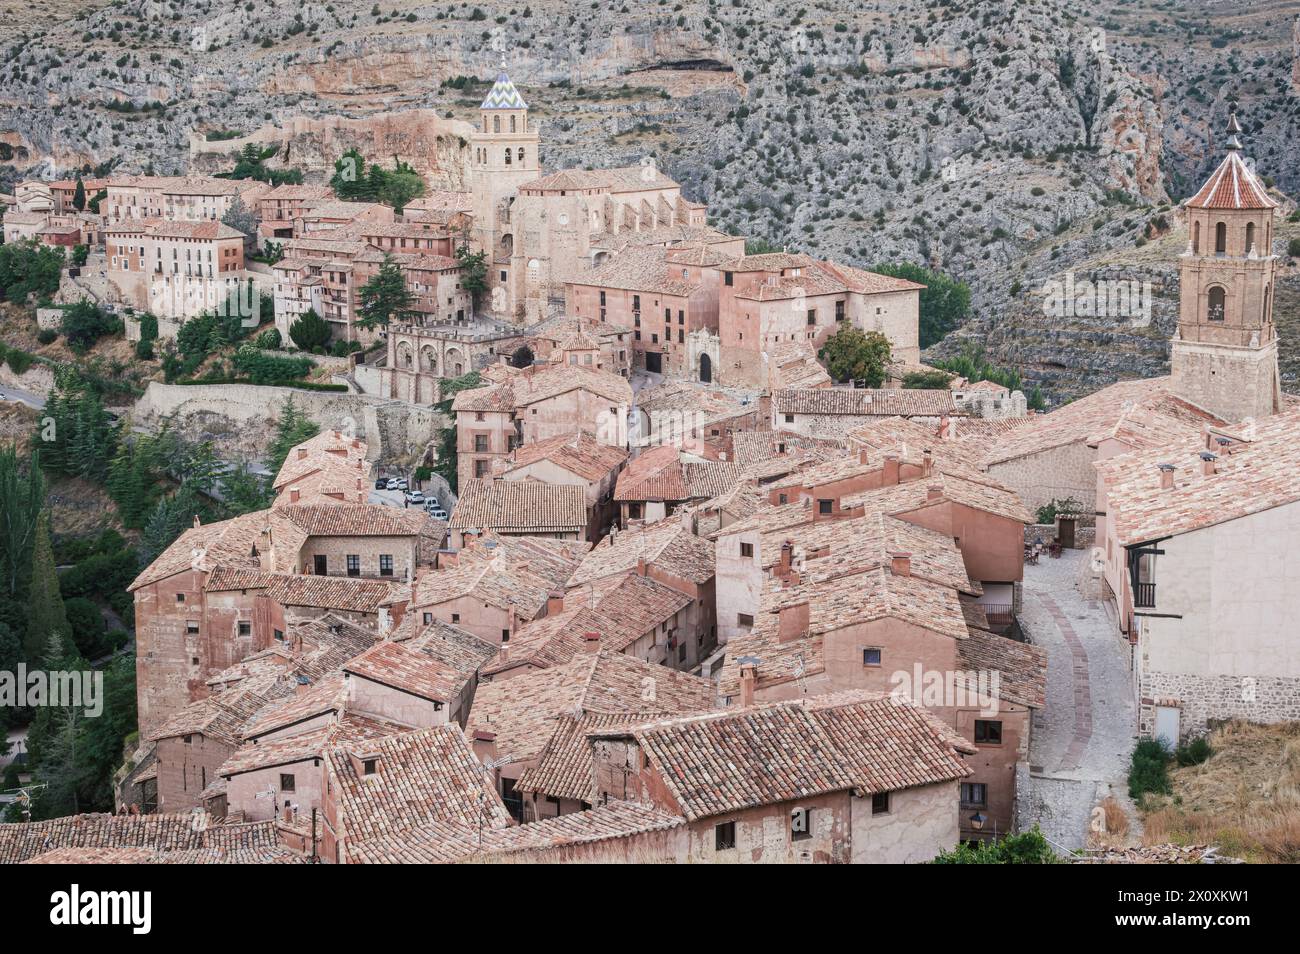 Historic Beauty: The rustic charm of Albarracín nestled in the mountains (Teruel, Aragón, Spain) Stock Photo